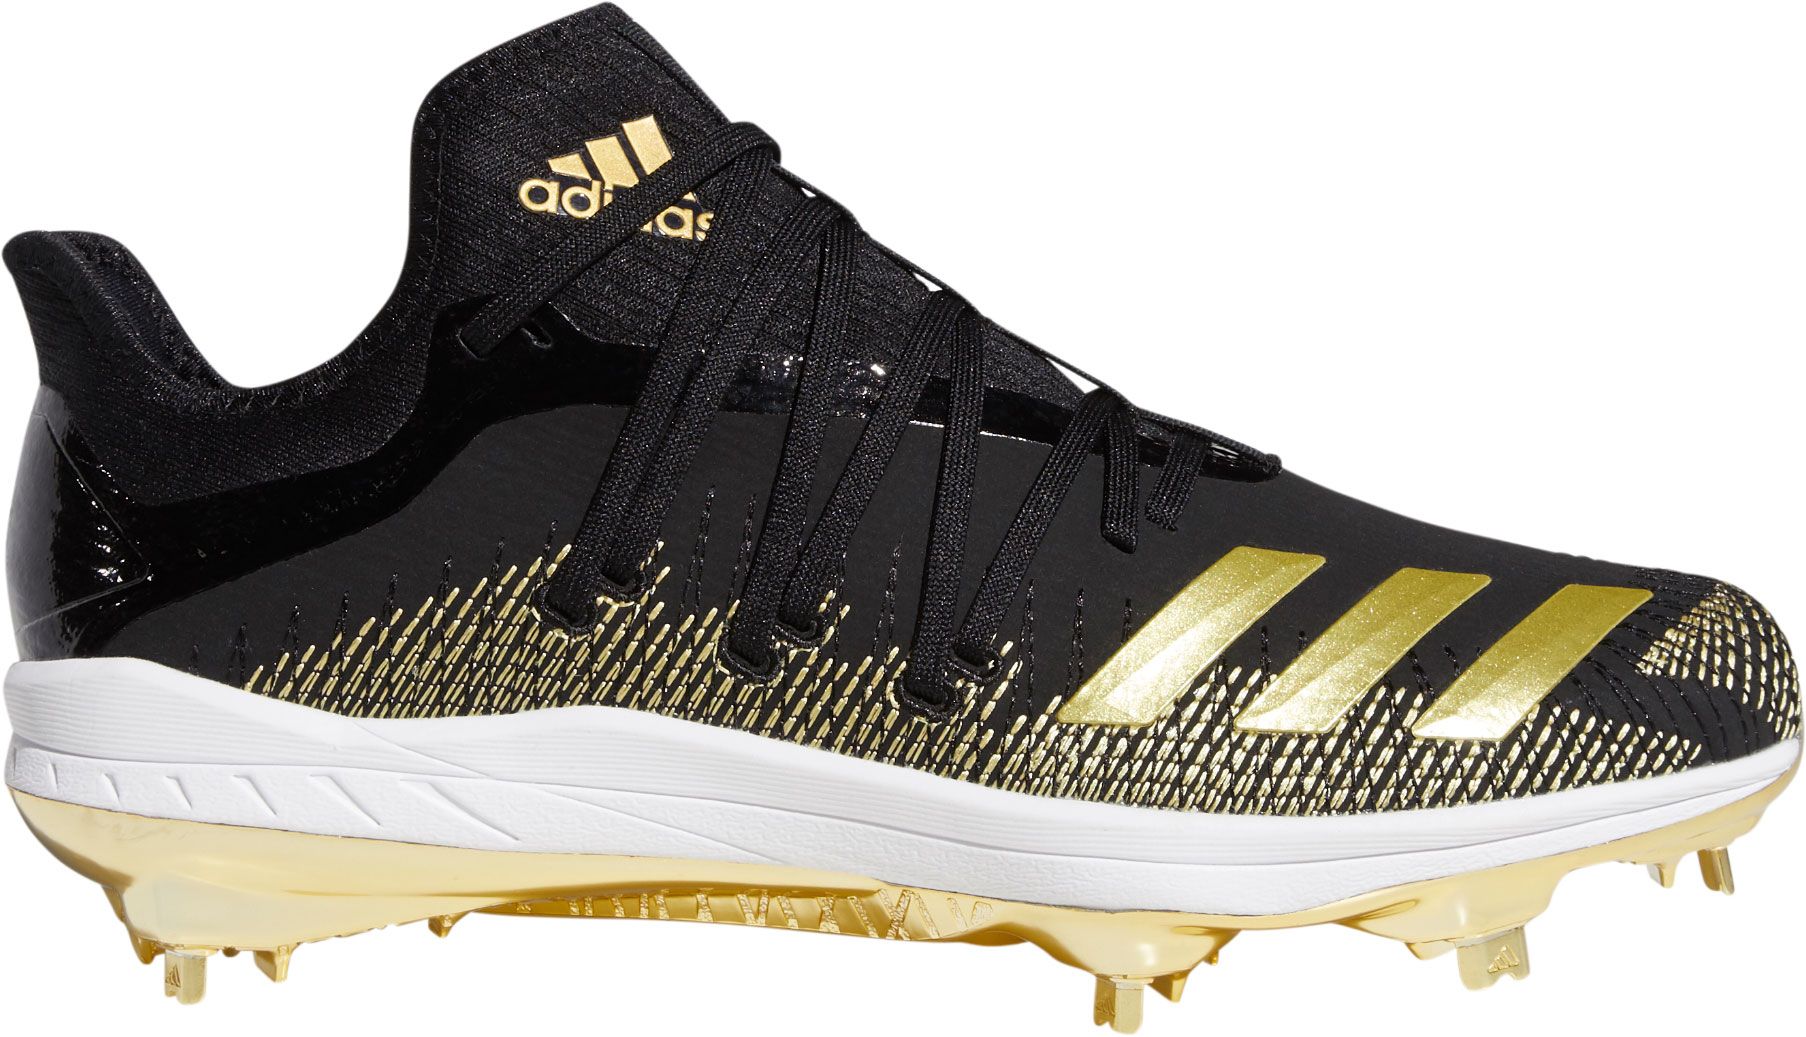 Adidas / Men's adizero Afterburner 6 GOLD Metal Baseball Cleats